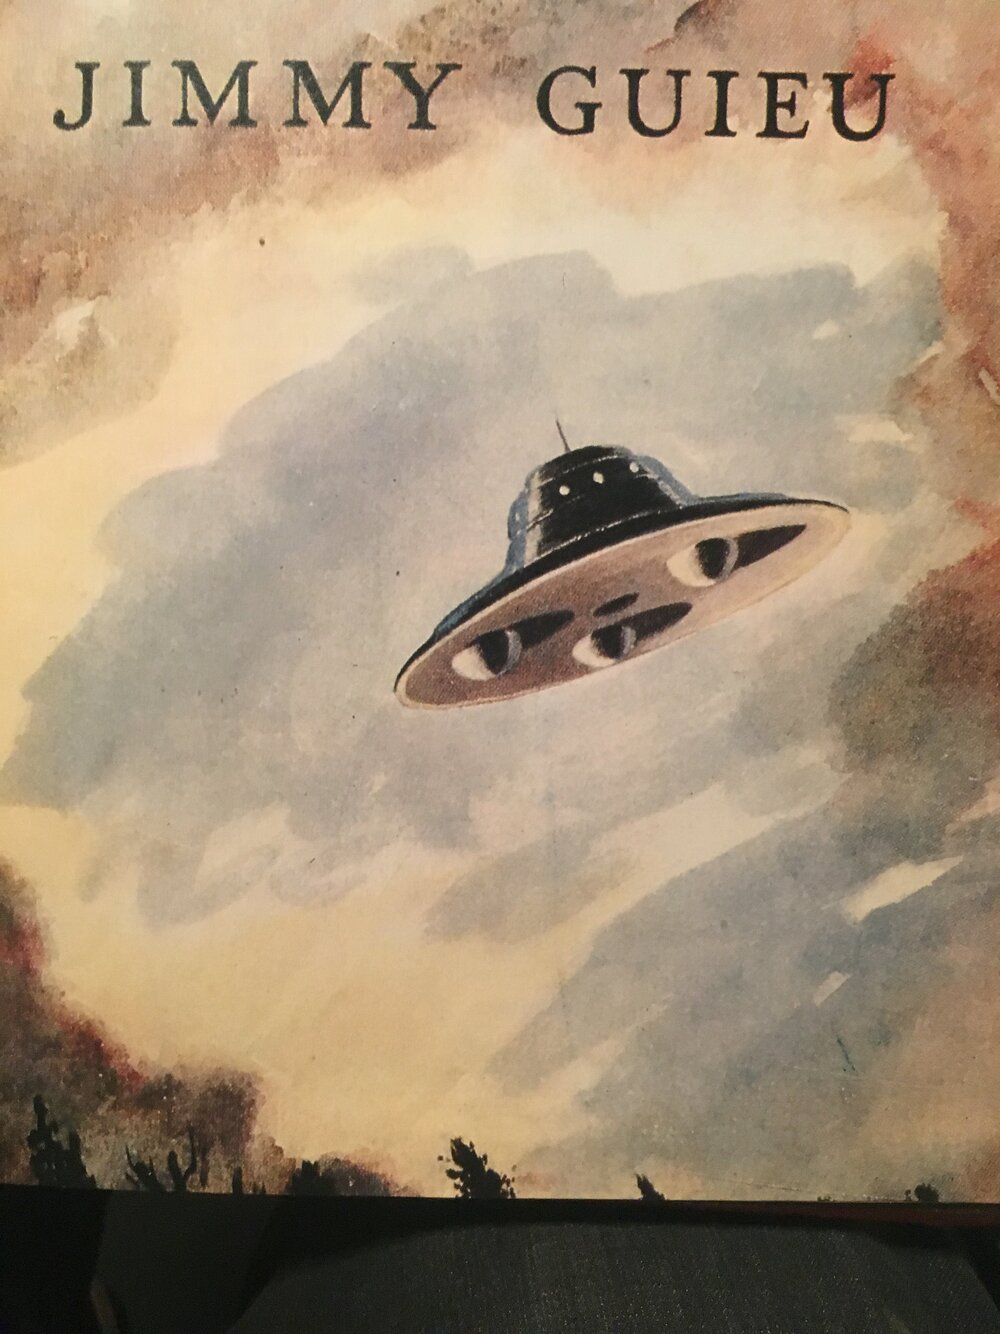 UFO art from xmas.JPG